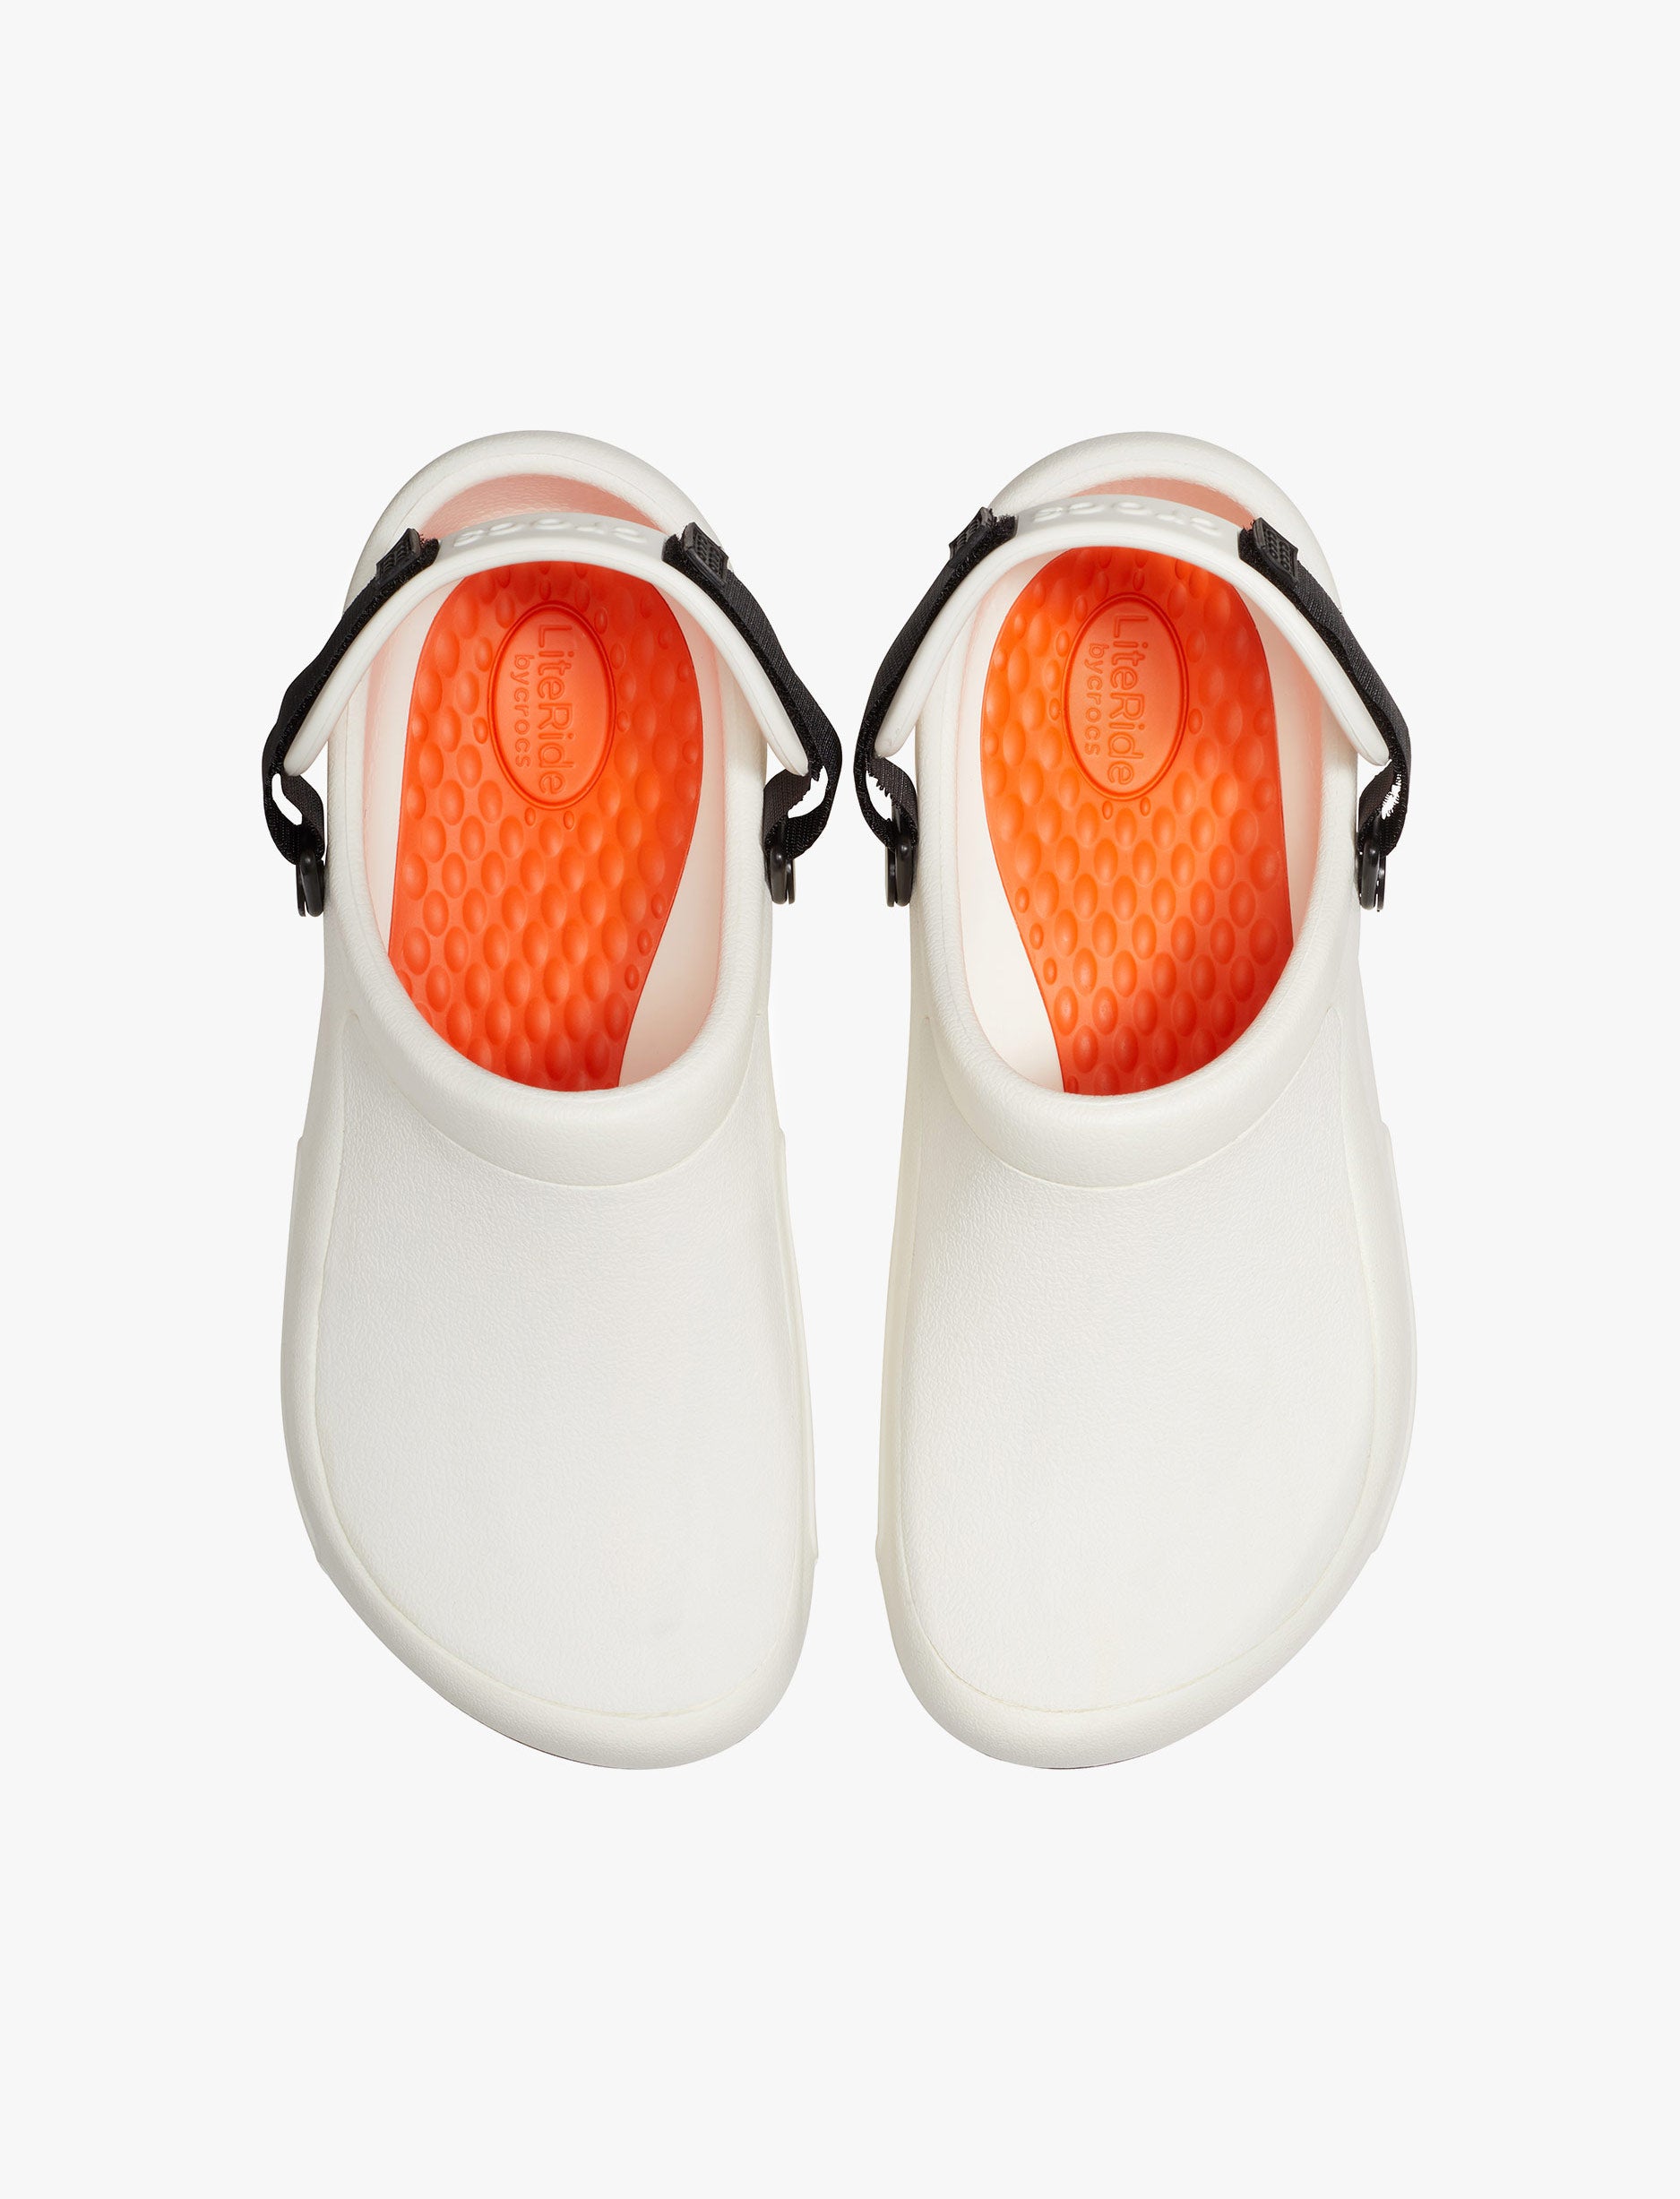 Crocs Bistro Pro LiteRid Clog - נעלי טבחים קרוקס ביסטרו סוליה מונעת החלקה